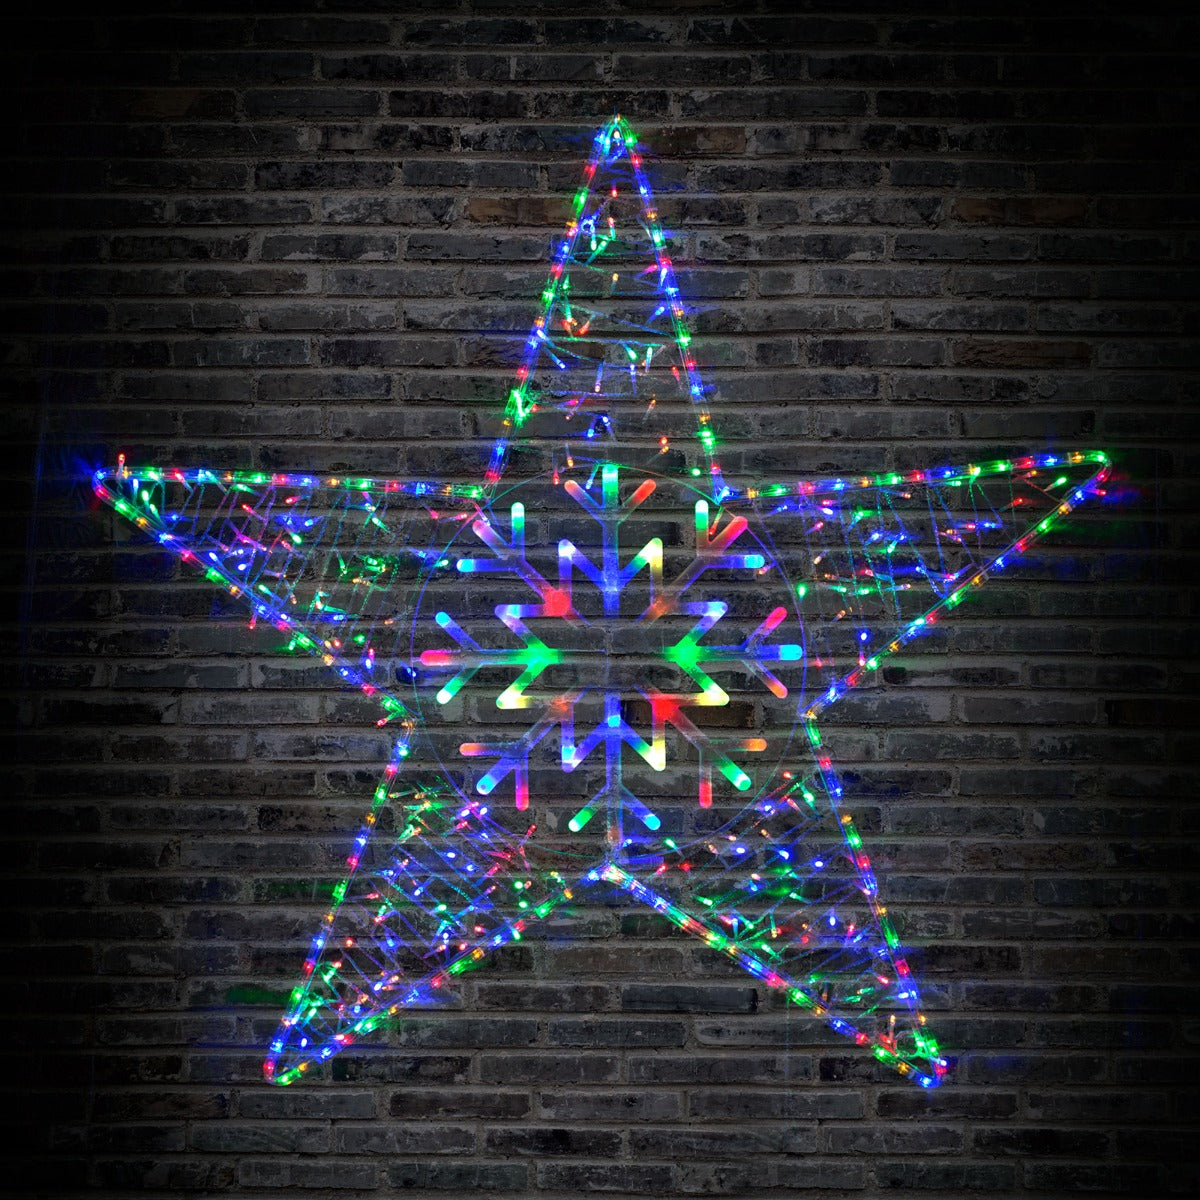 Stockholm Christmas Lights LED Ropelight Star Snowflake Fairy Lights 105cm